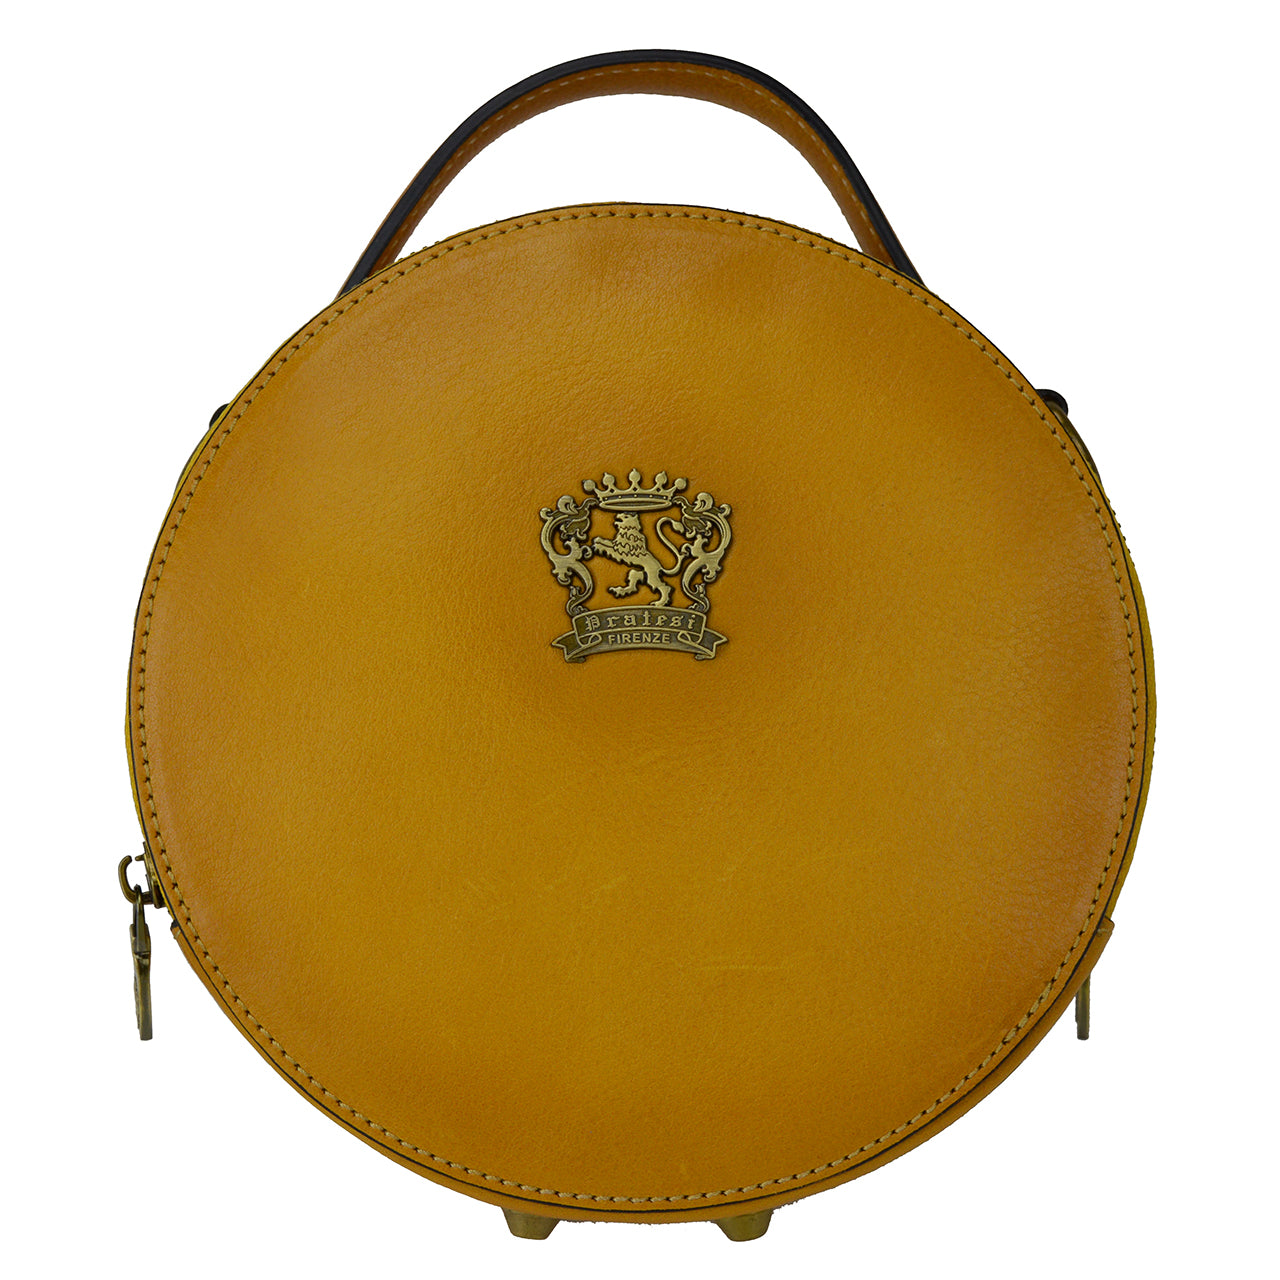 Pratesi Troghi B188 Tote Bag in genuine Italian leather - Troghi B188 Mustard